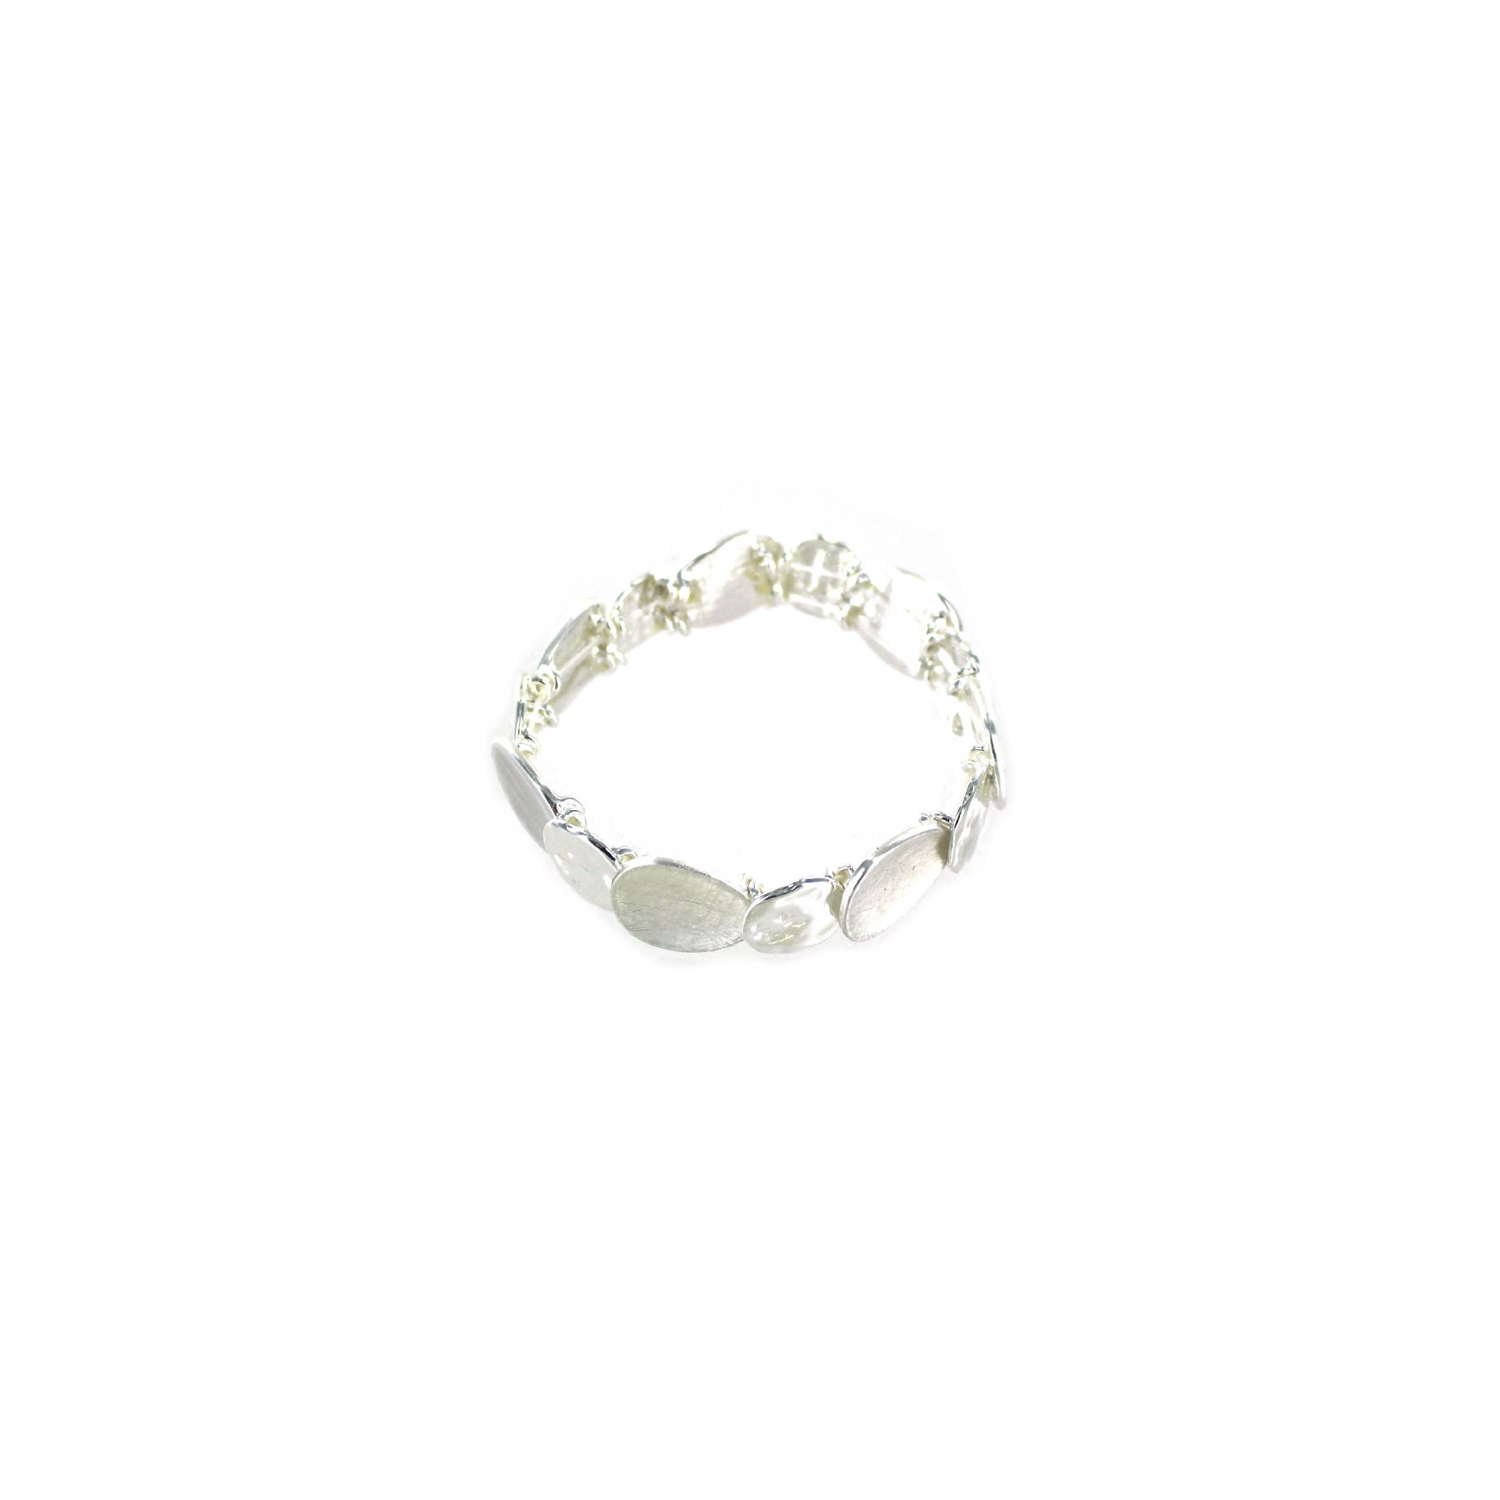 Silver tone multi panel elasticated bracelet.